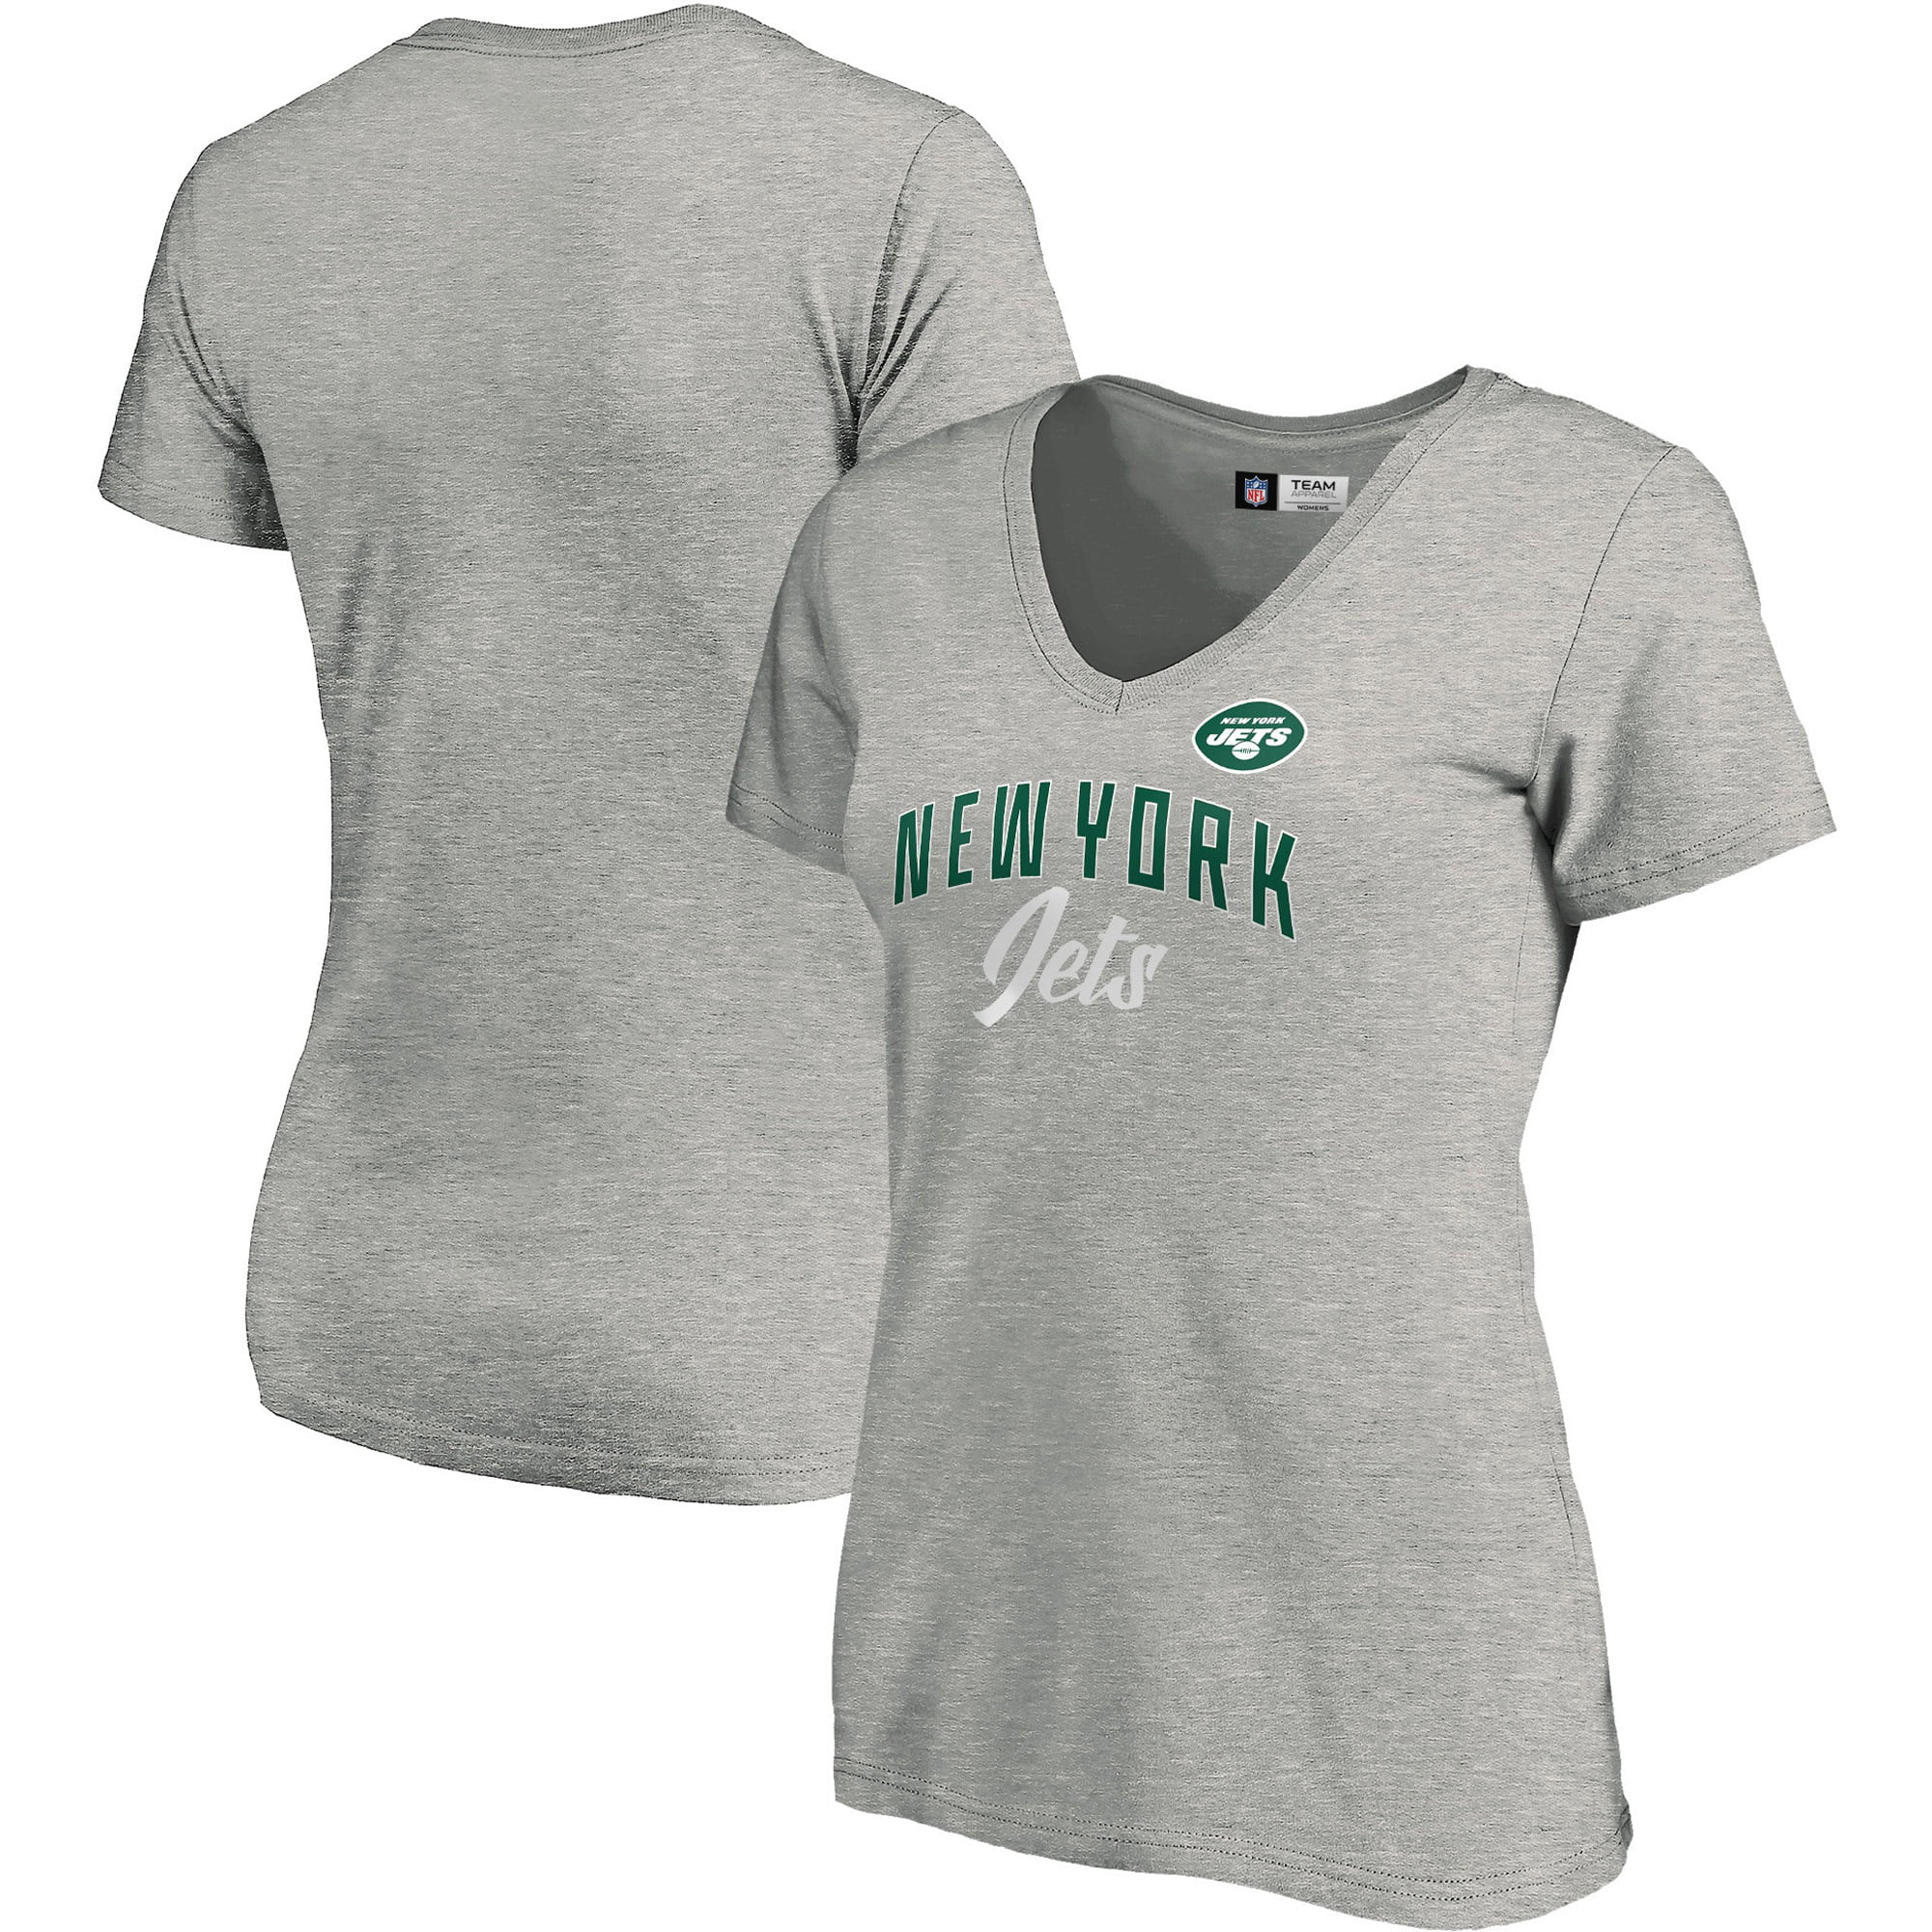 New York Jets Womens - Walmart.com